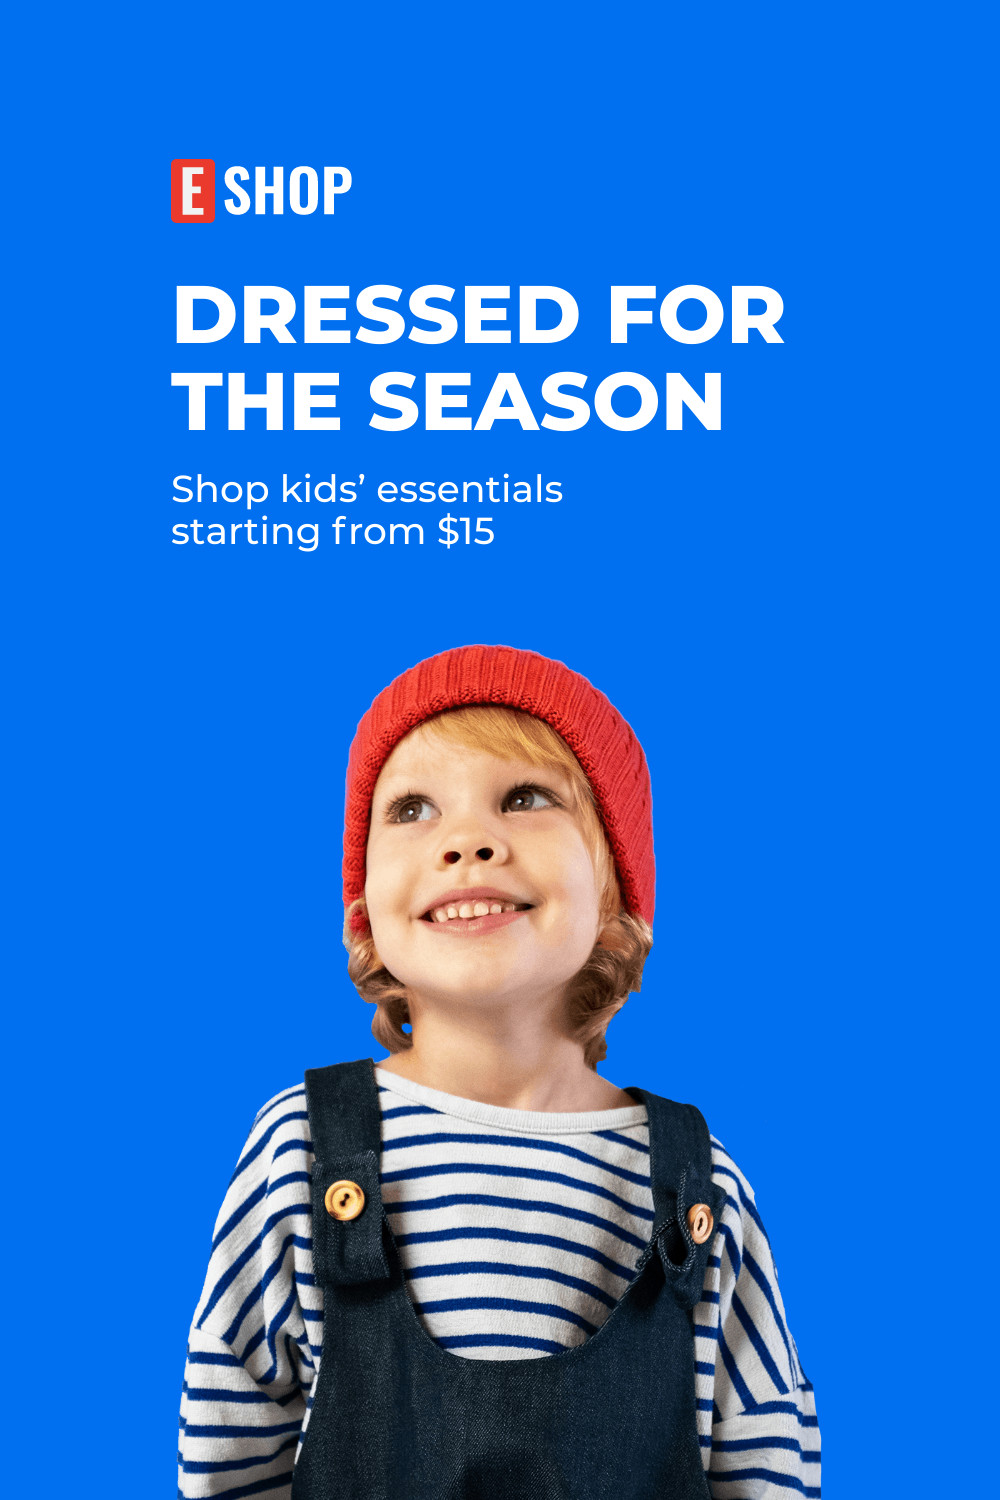 Dress Kids For The Season Inline Rectangle 300x250